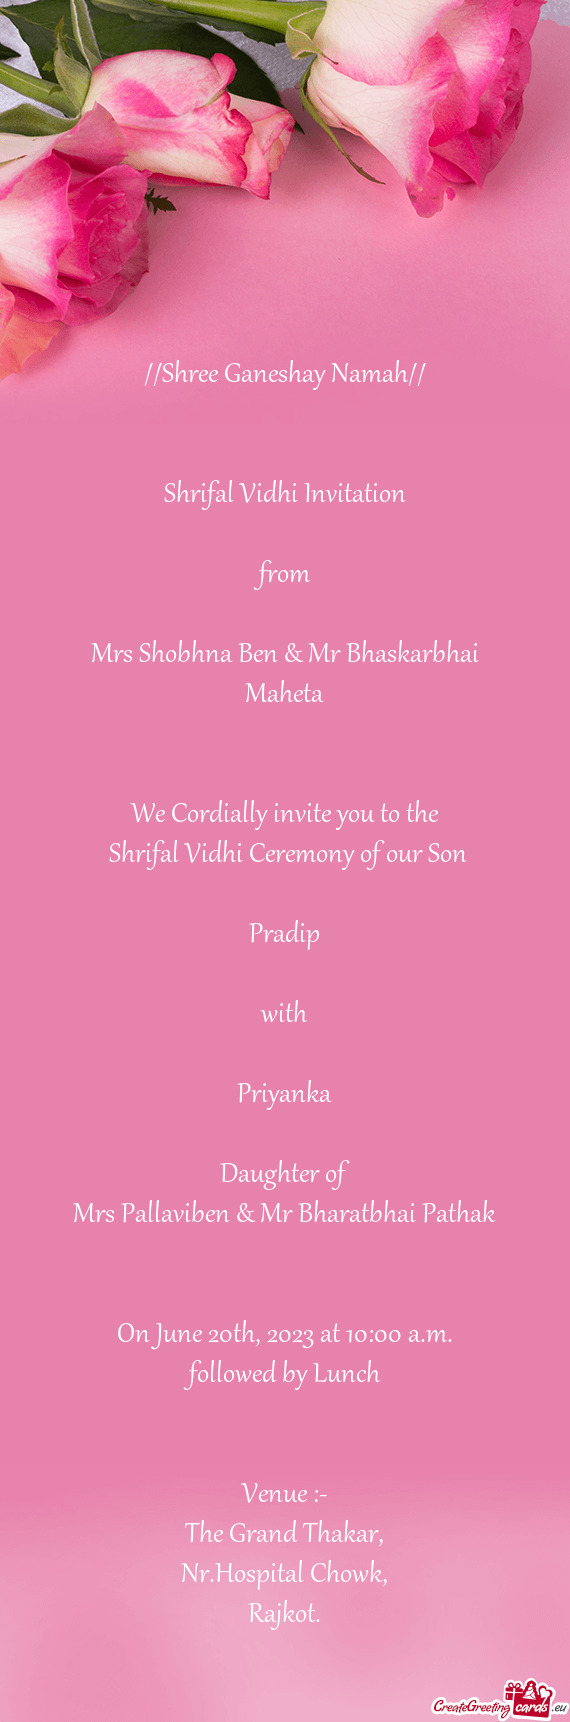 Mrs Shobhna Ben & Mr Bhaskarbhai Maheta